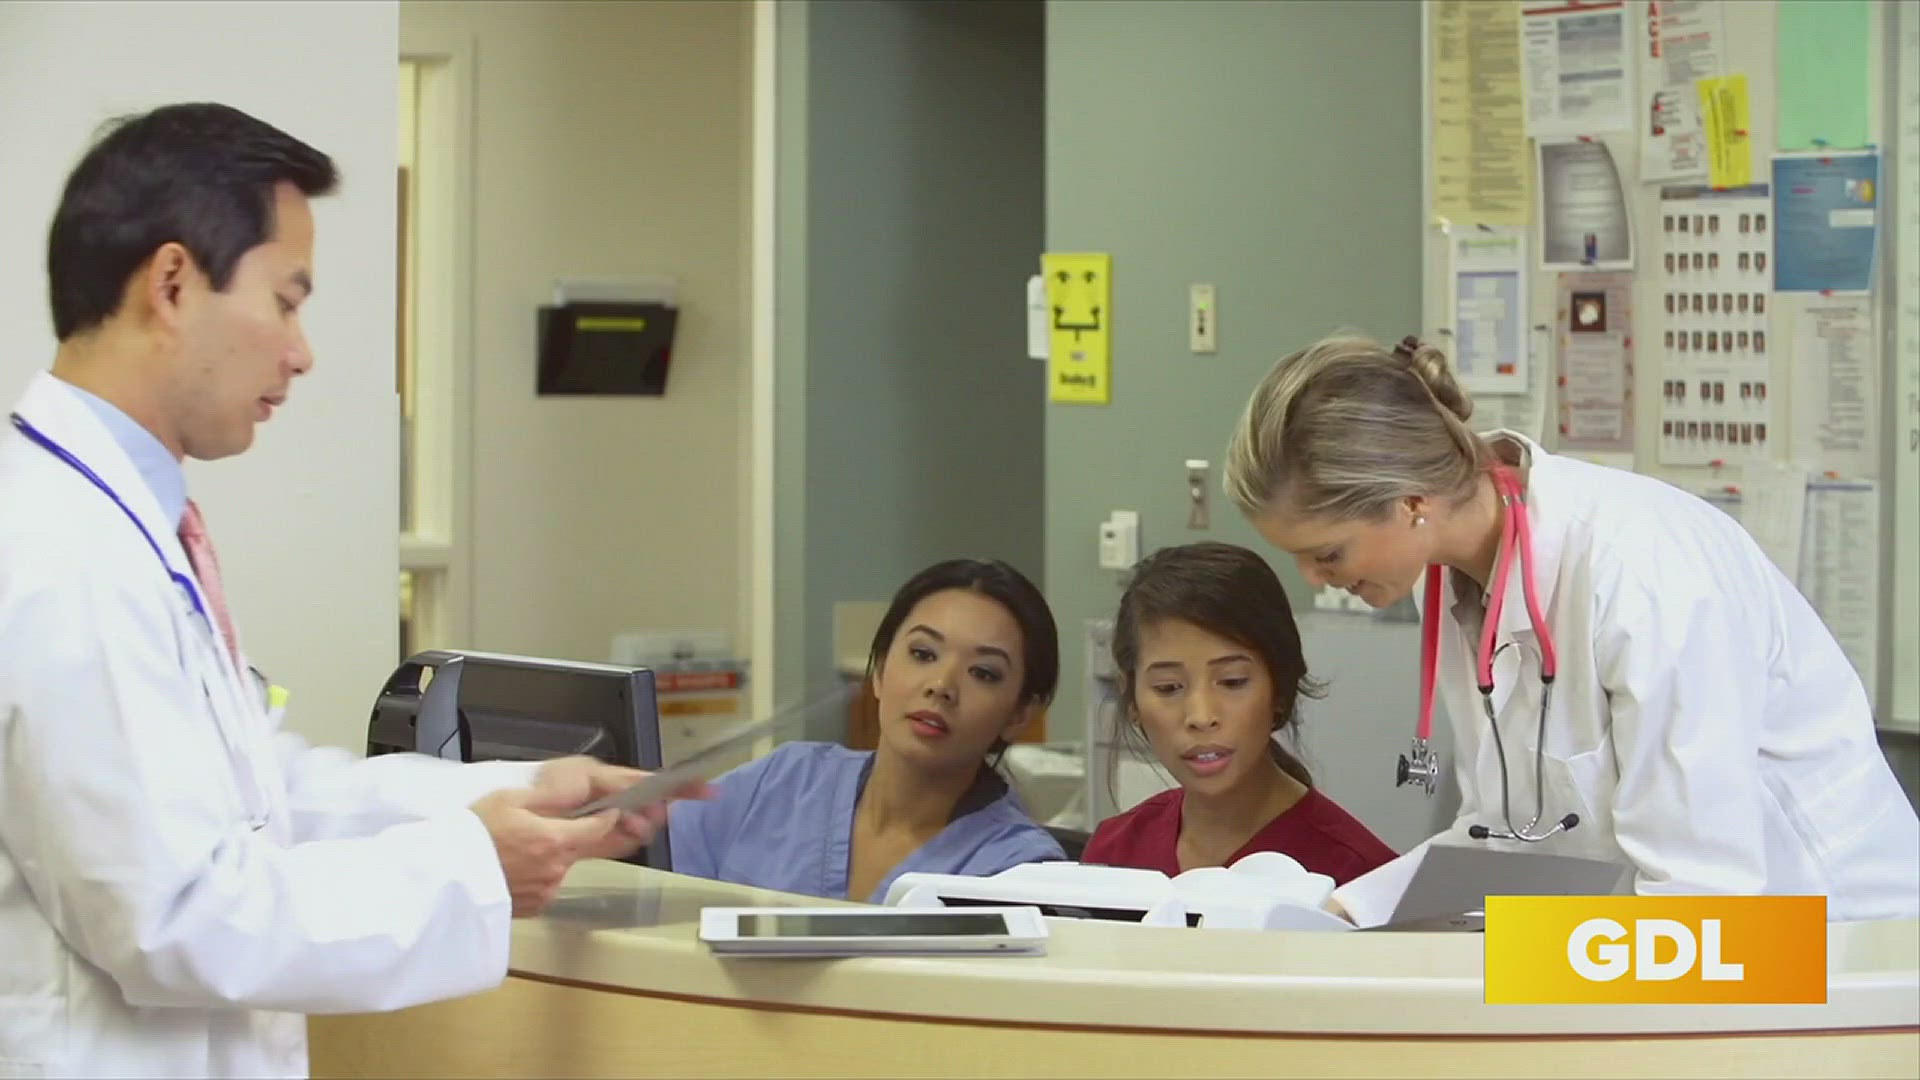 UofL Health honors the hard work that nurses do during National Nurses Week.